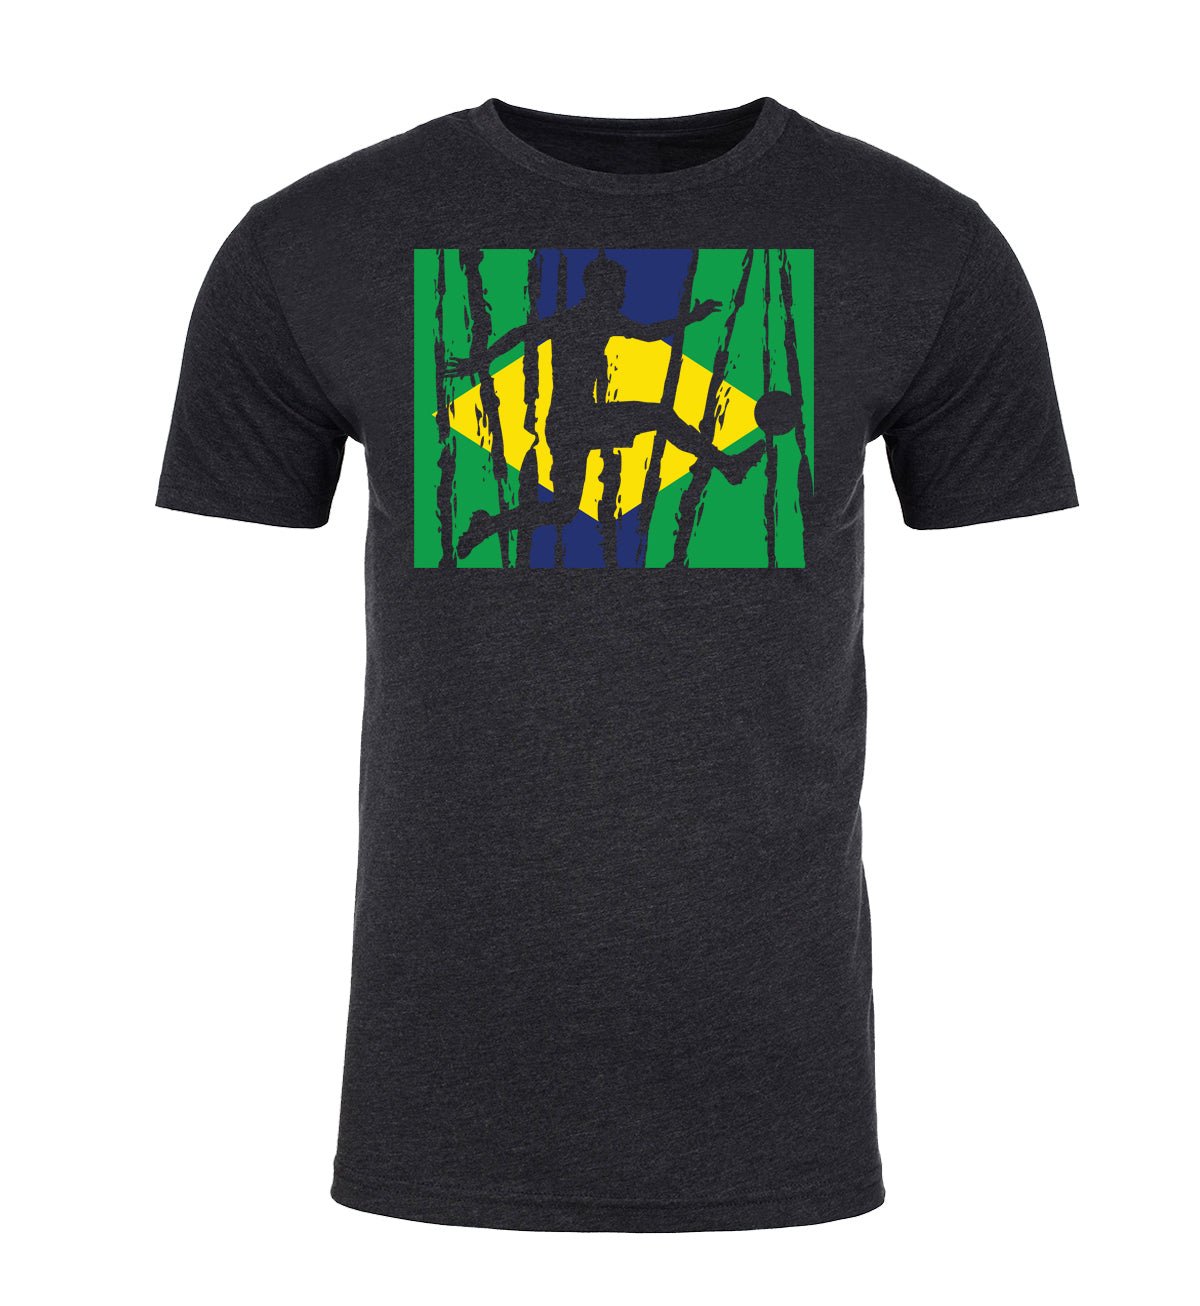 Brazil Soccer Pride Unisex T Shirts - Mato & Hash